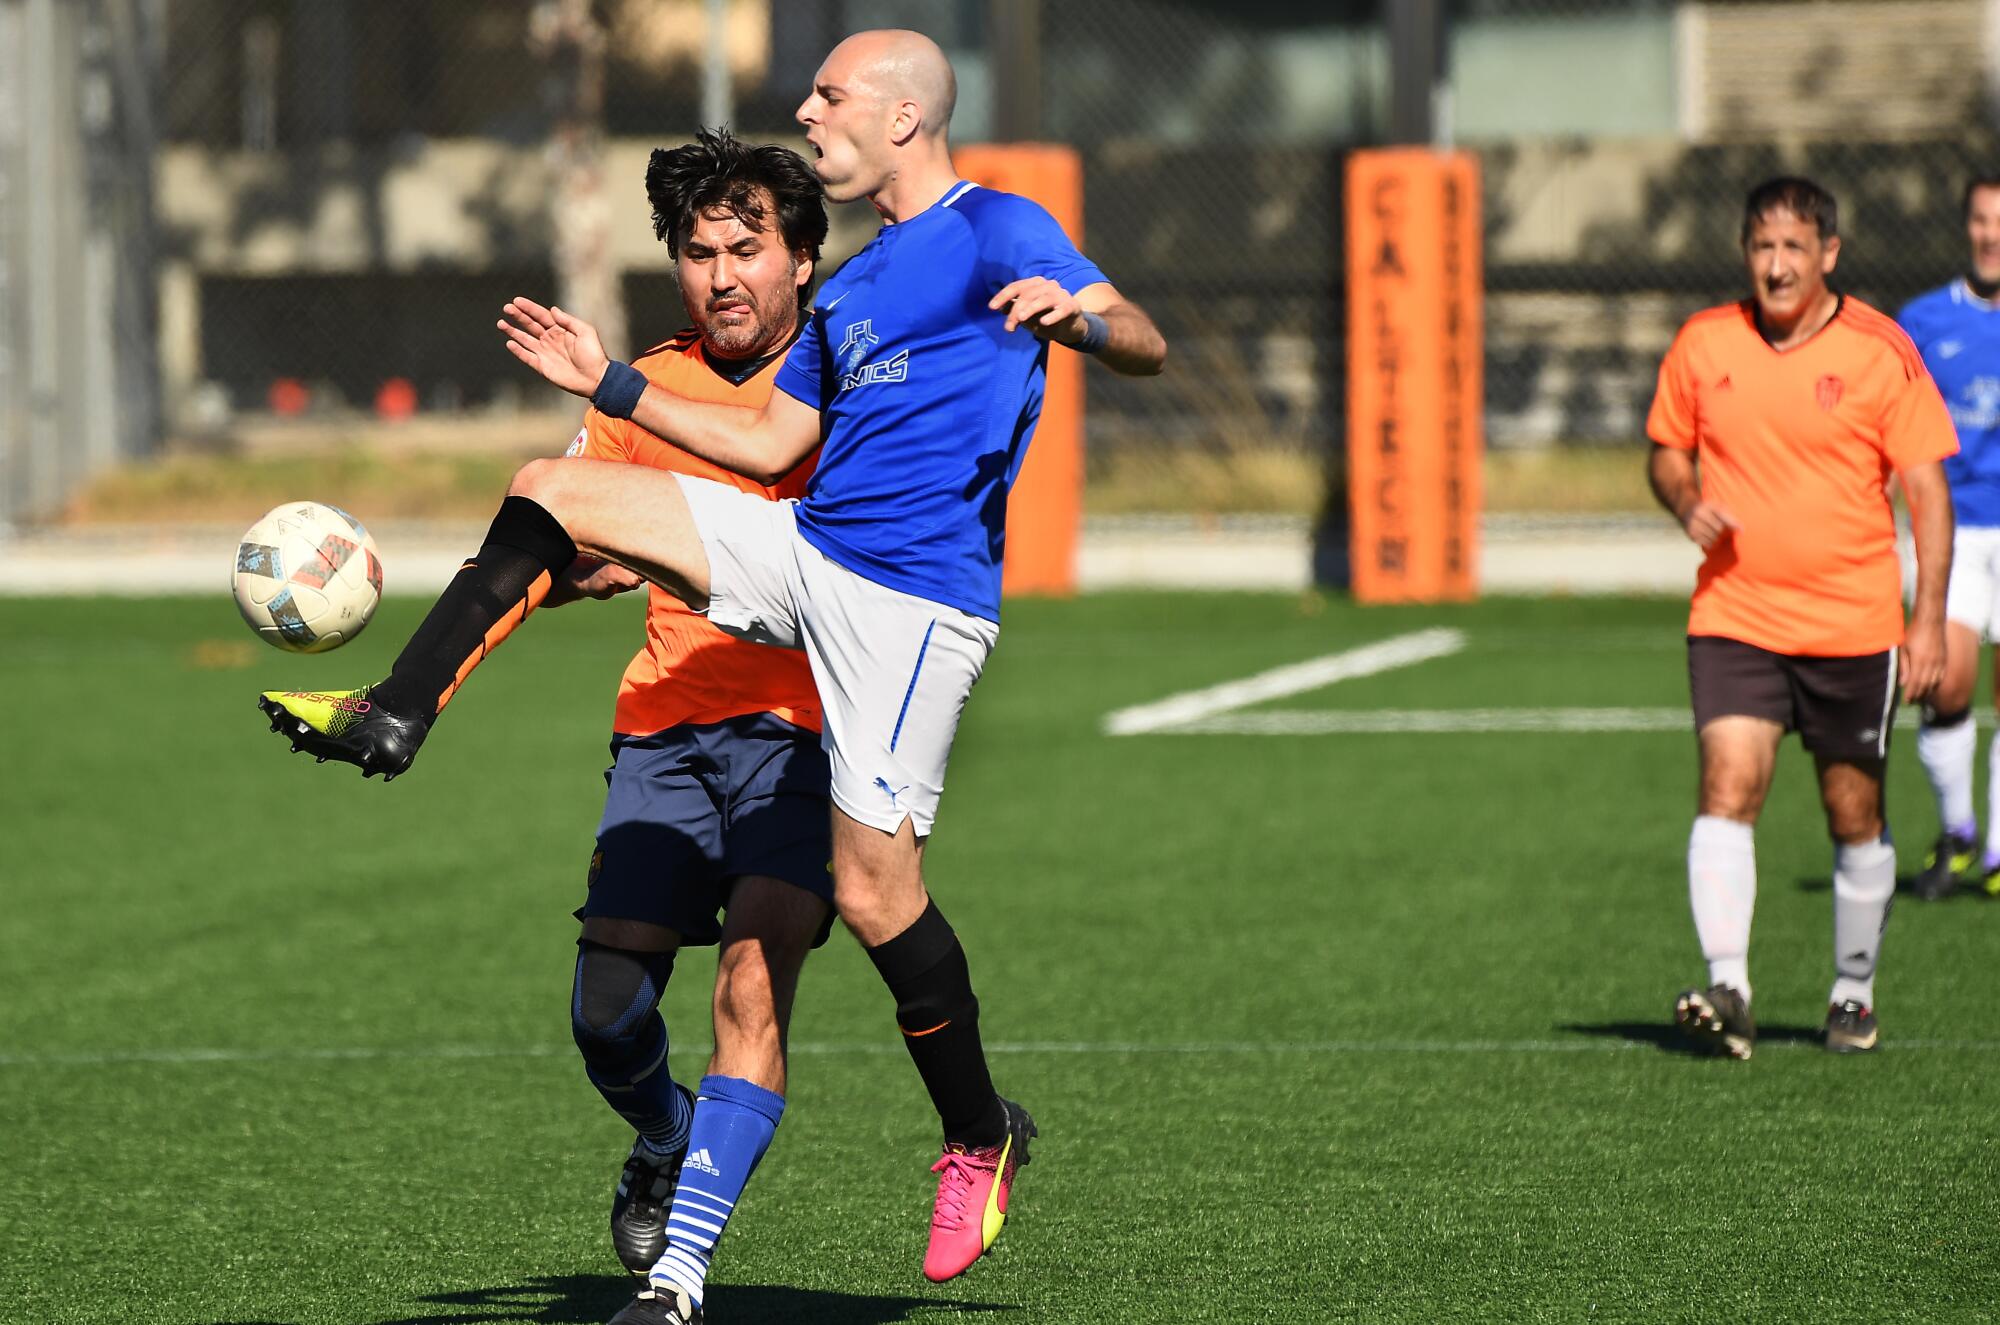 Marcello Gori, right, battles for the ball during a Nerd Soccer League game at Caltech in Pasadena.